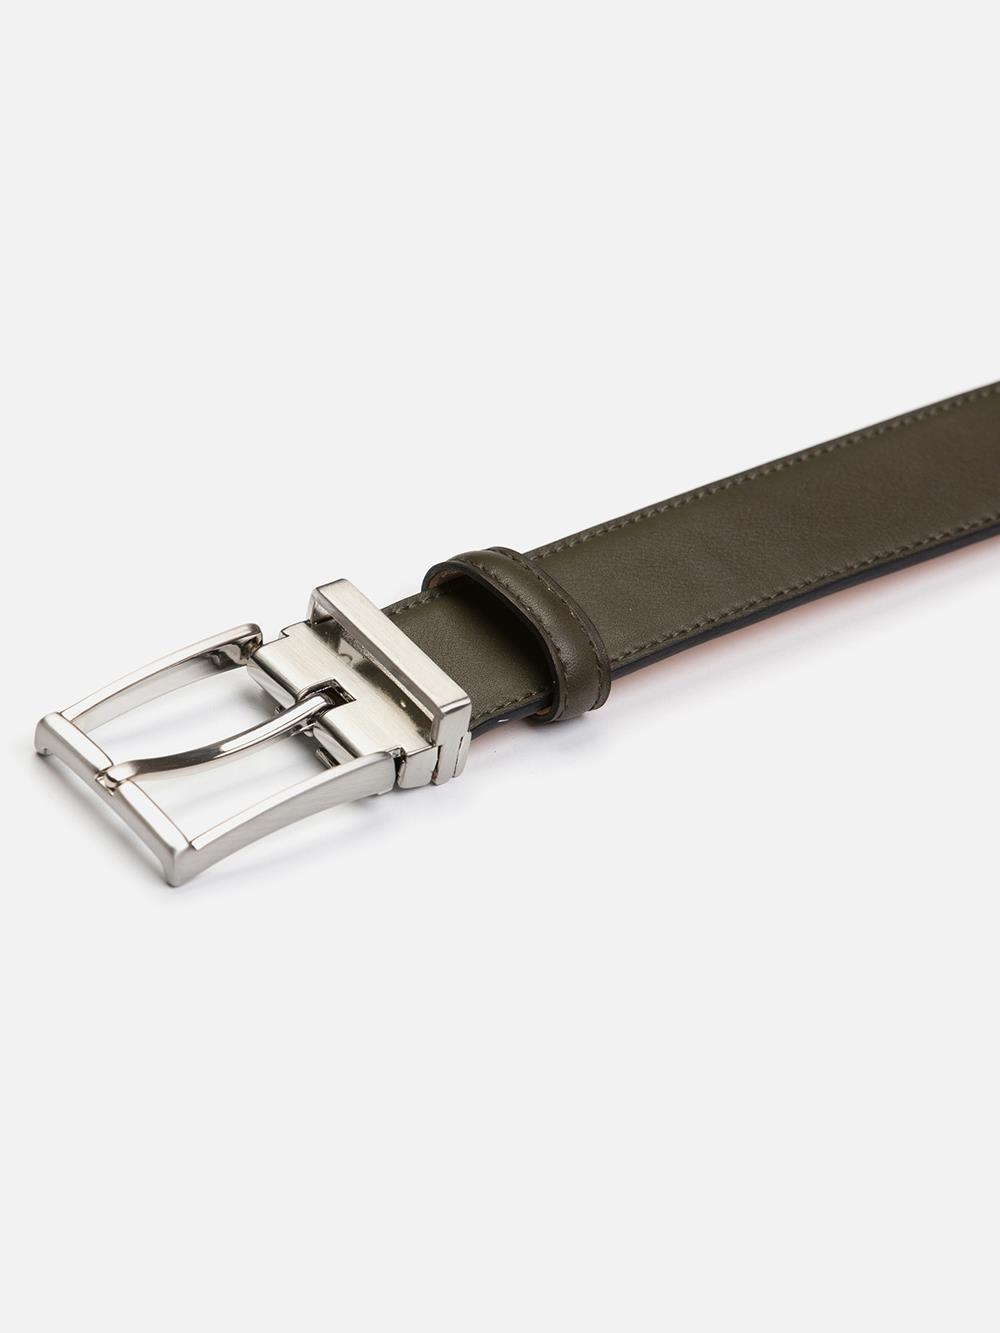 Khaki leather belt